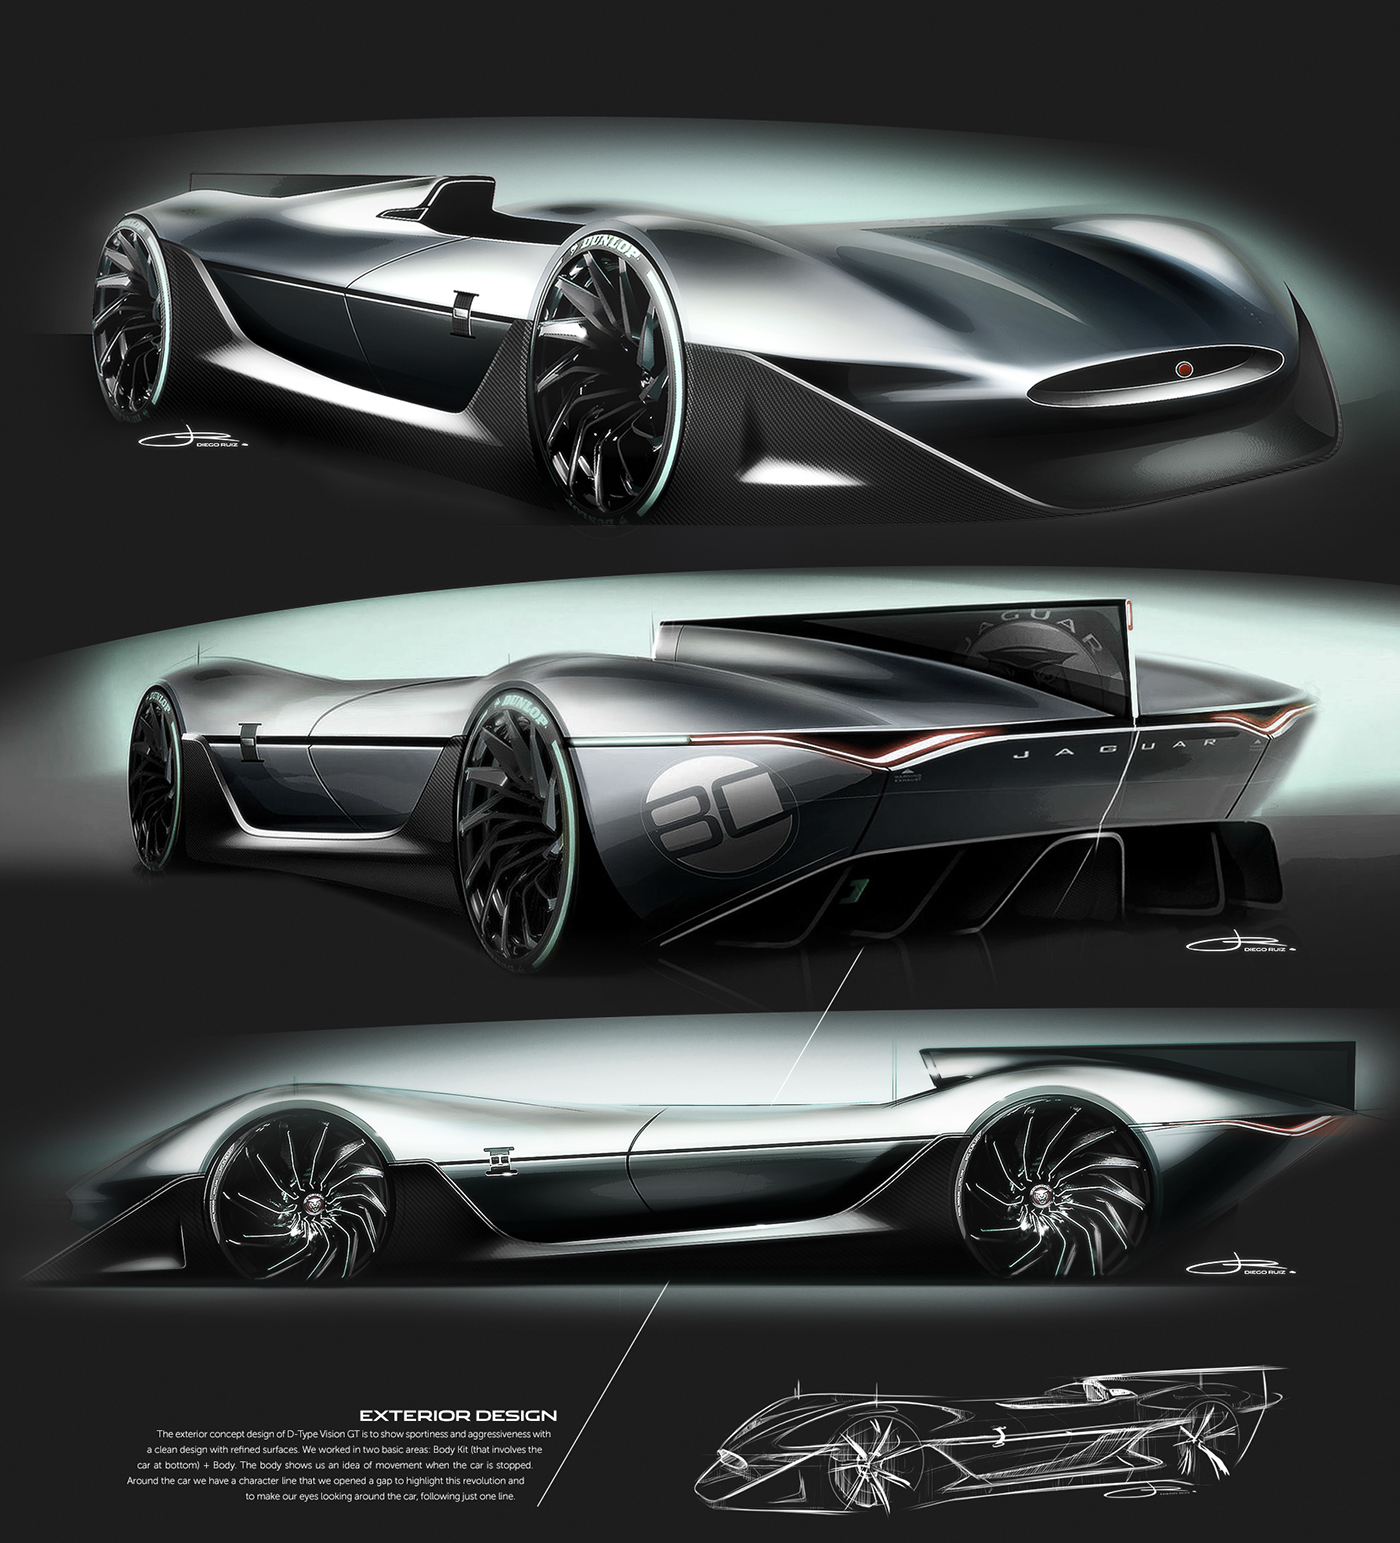 Adobe Portfolio jaguar VisionGT granturismo conceptcar transportationdesign cardesign